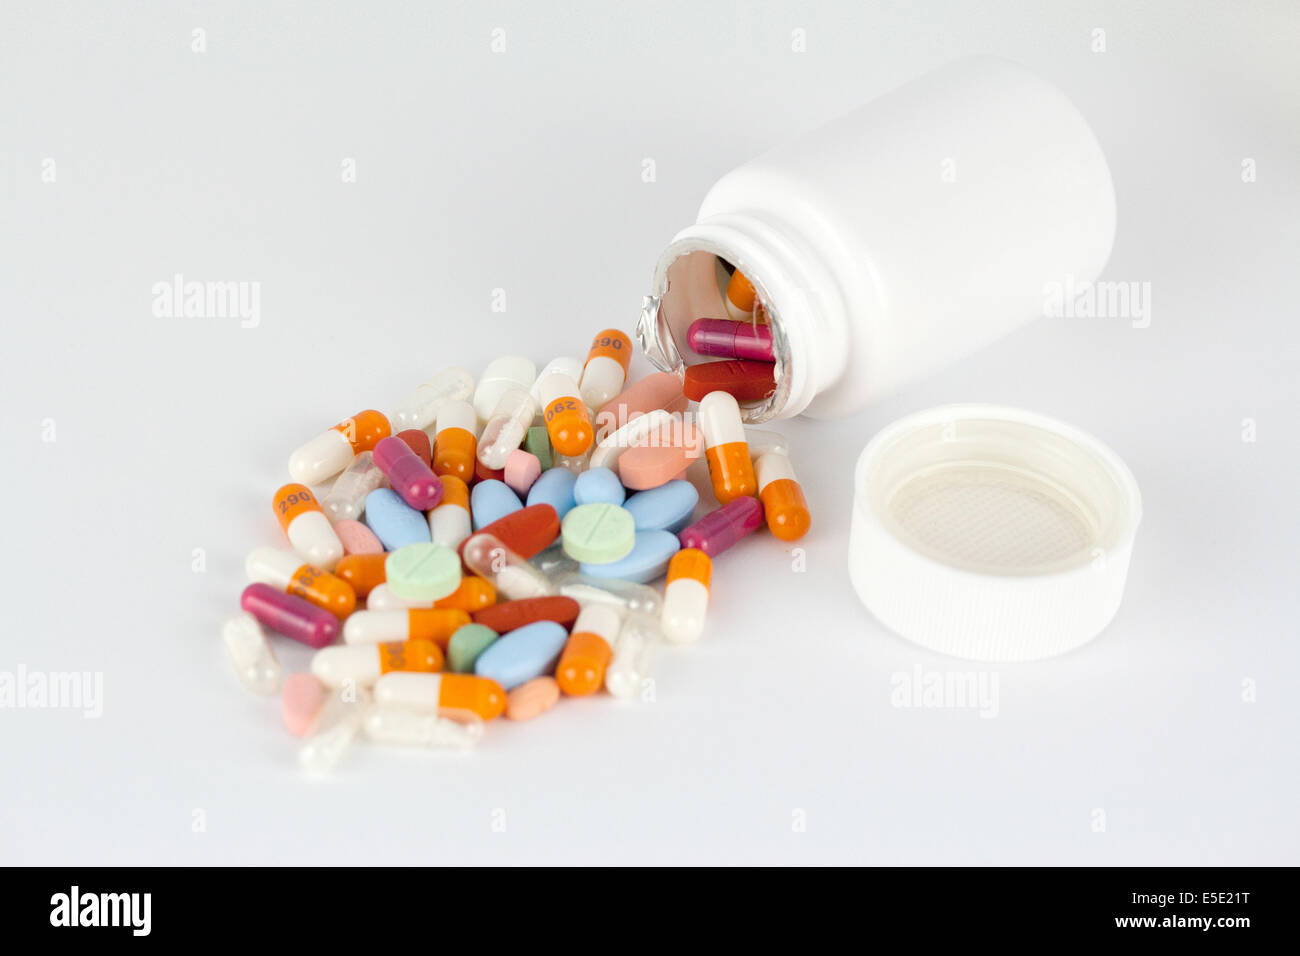 Tabletten medikamente pillen medikament pille tablette apotheke gesundheit medizin medizinisch pharma pharmazie pharmazeutisch b Foto Stock